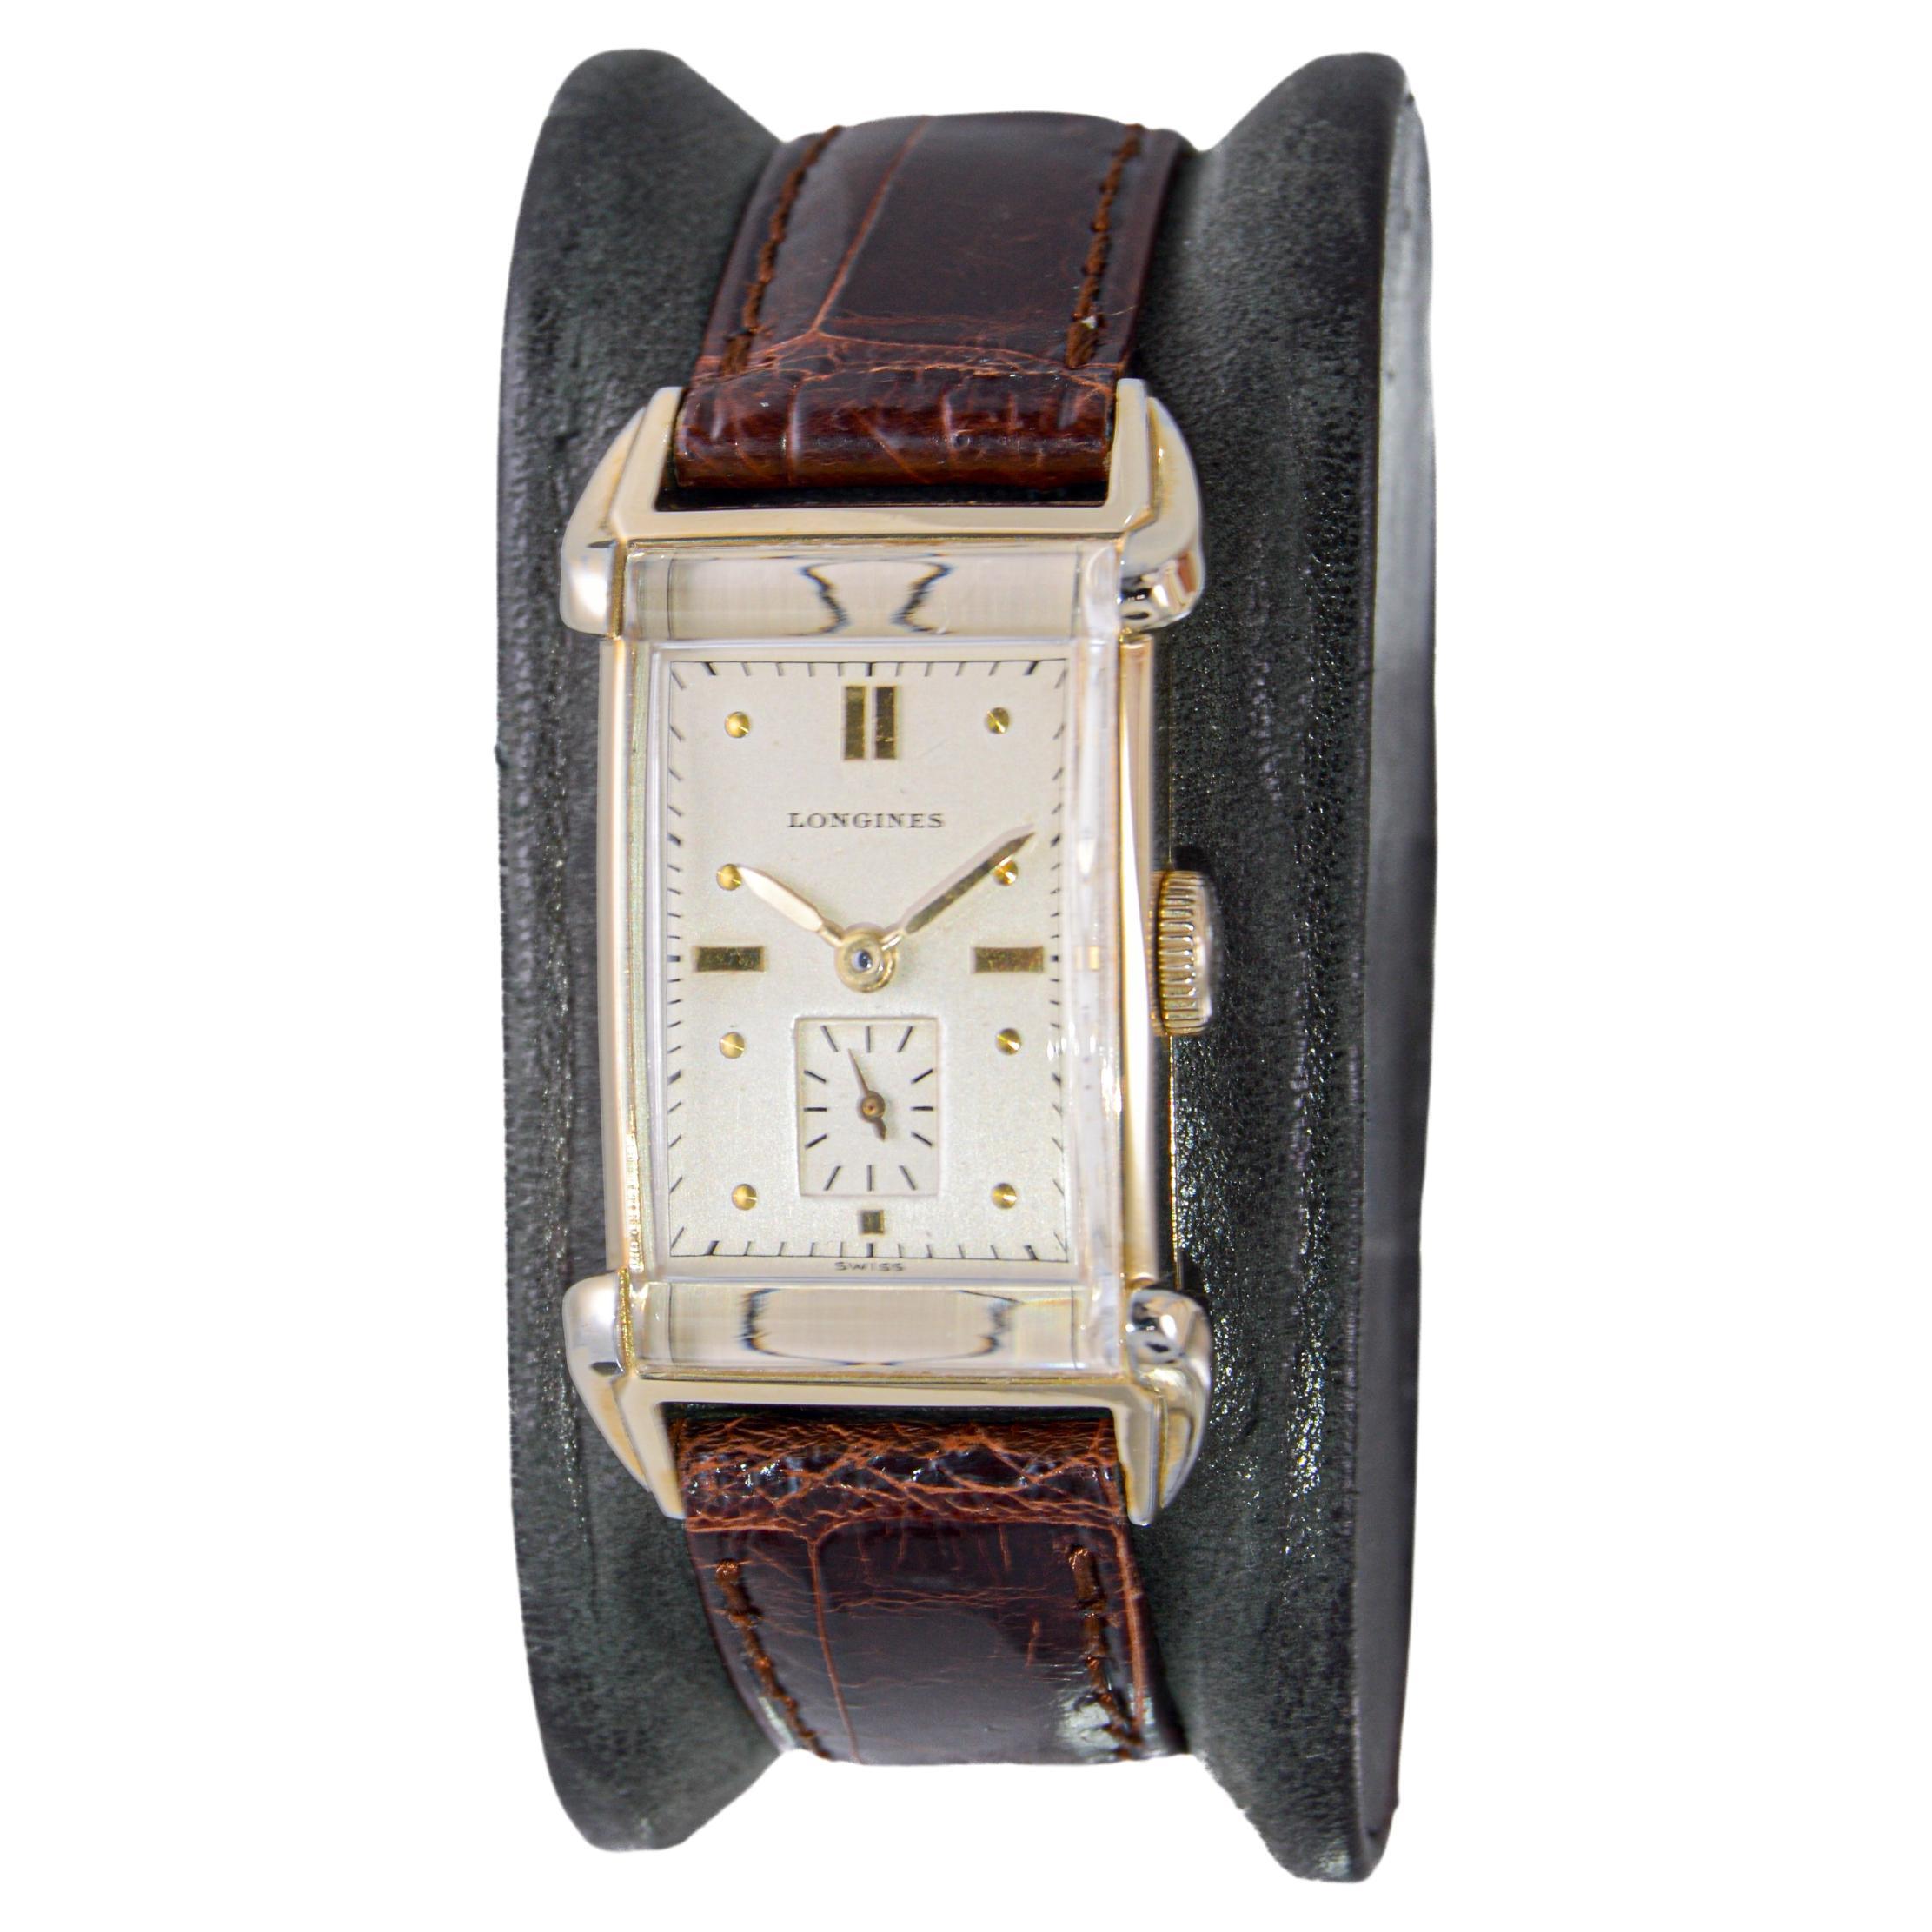 1940s longines watch